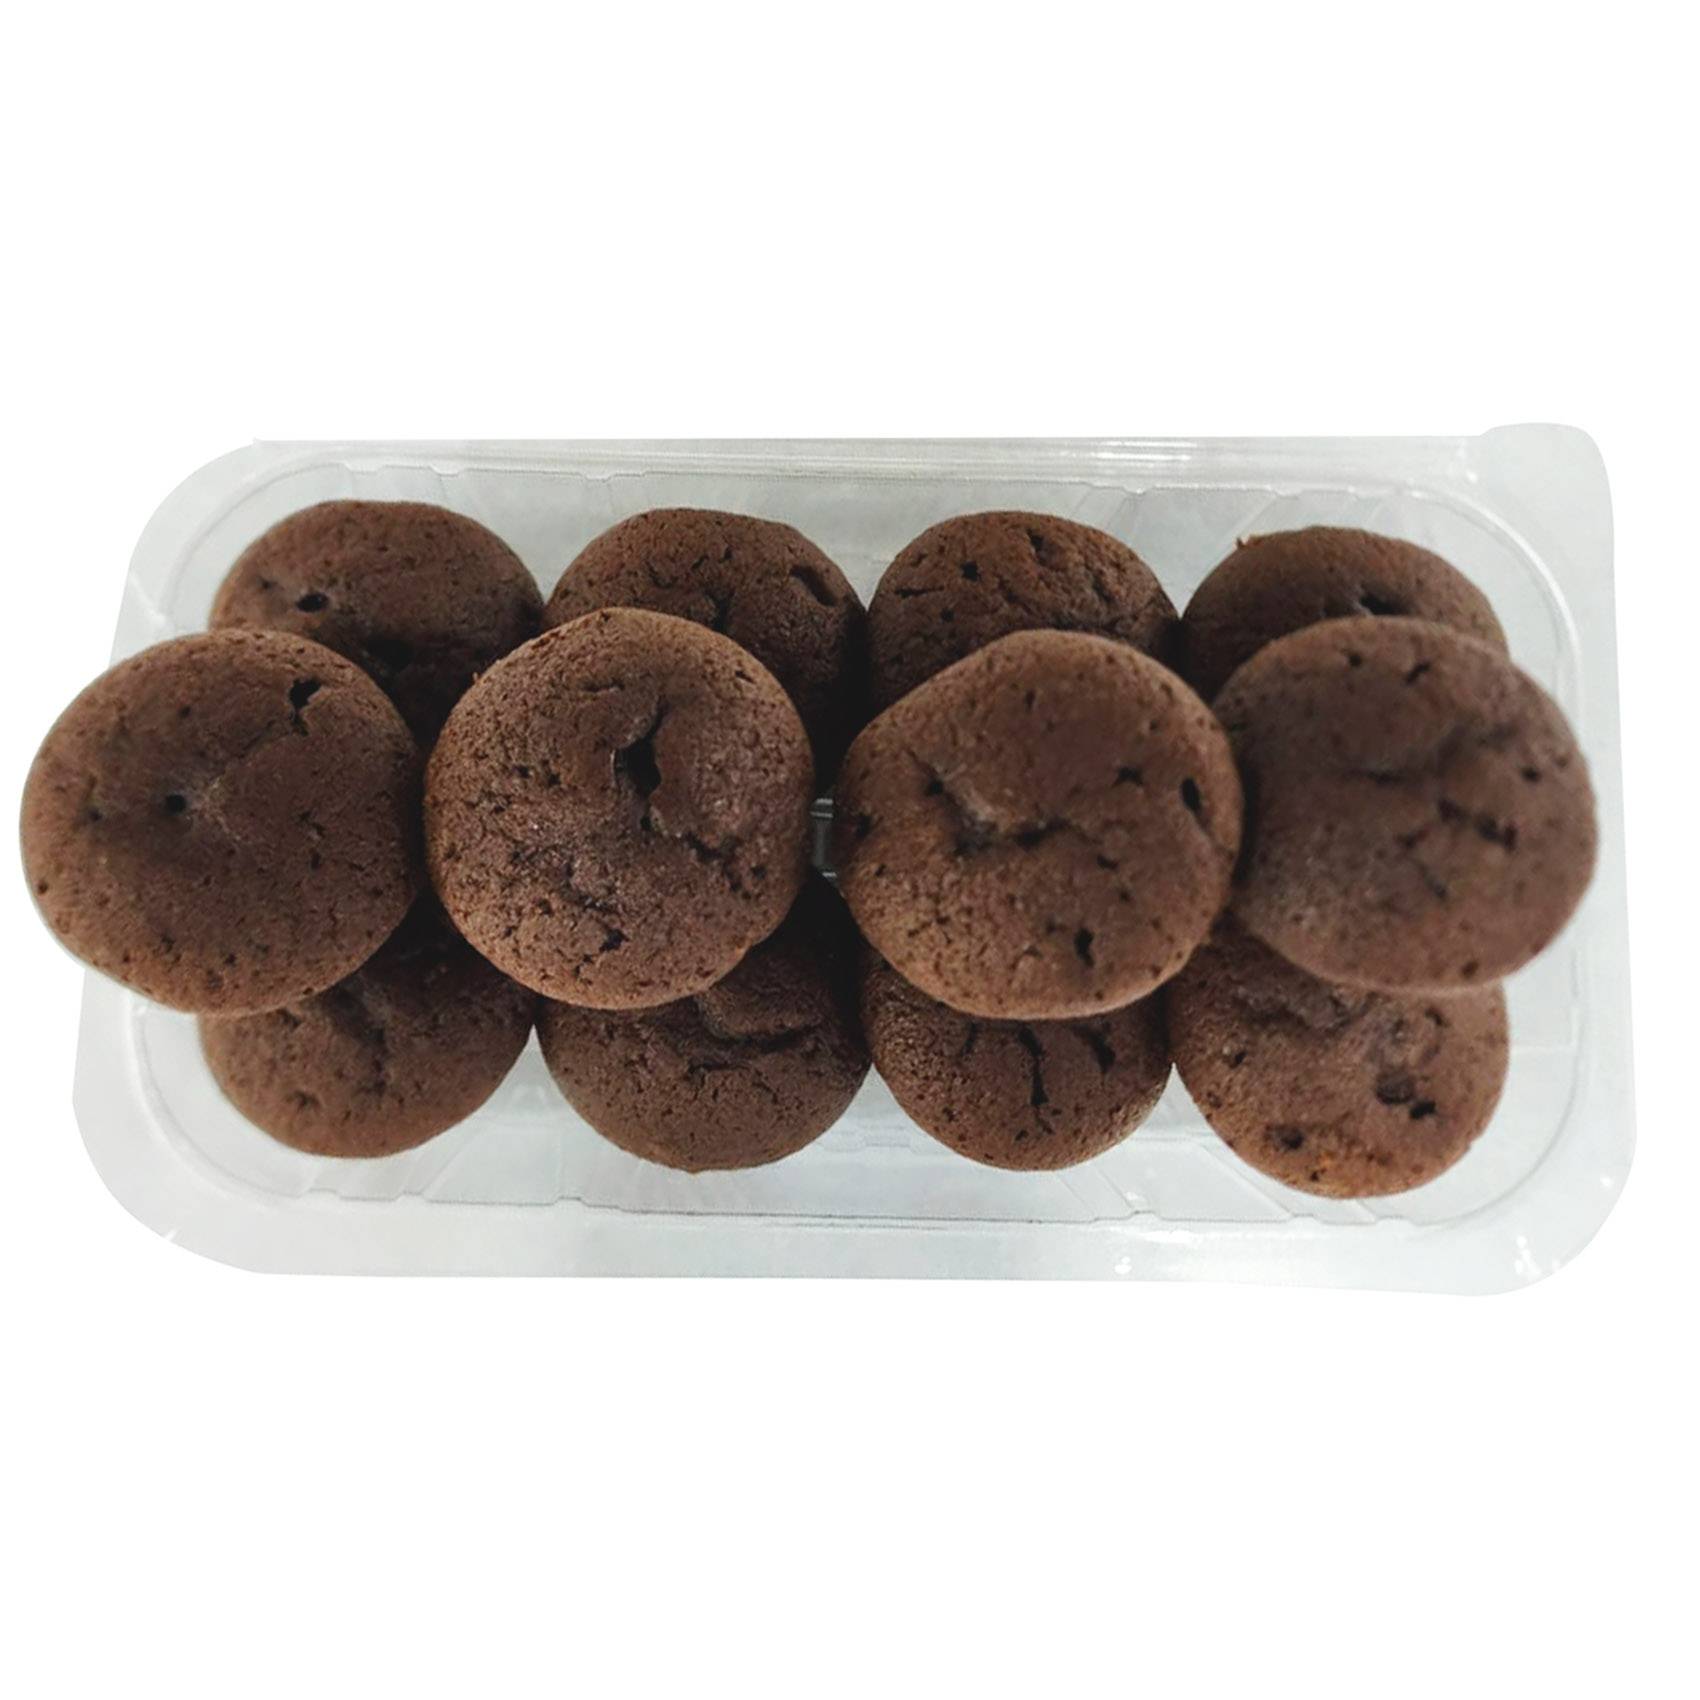 Mini Chocolate Muffins 12-Piece Pack